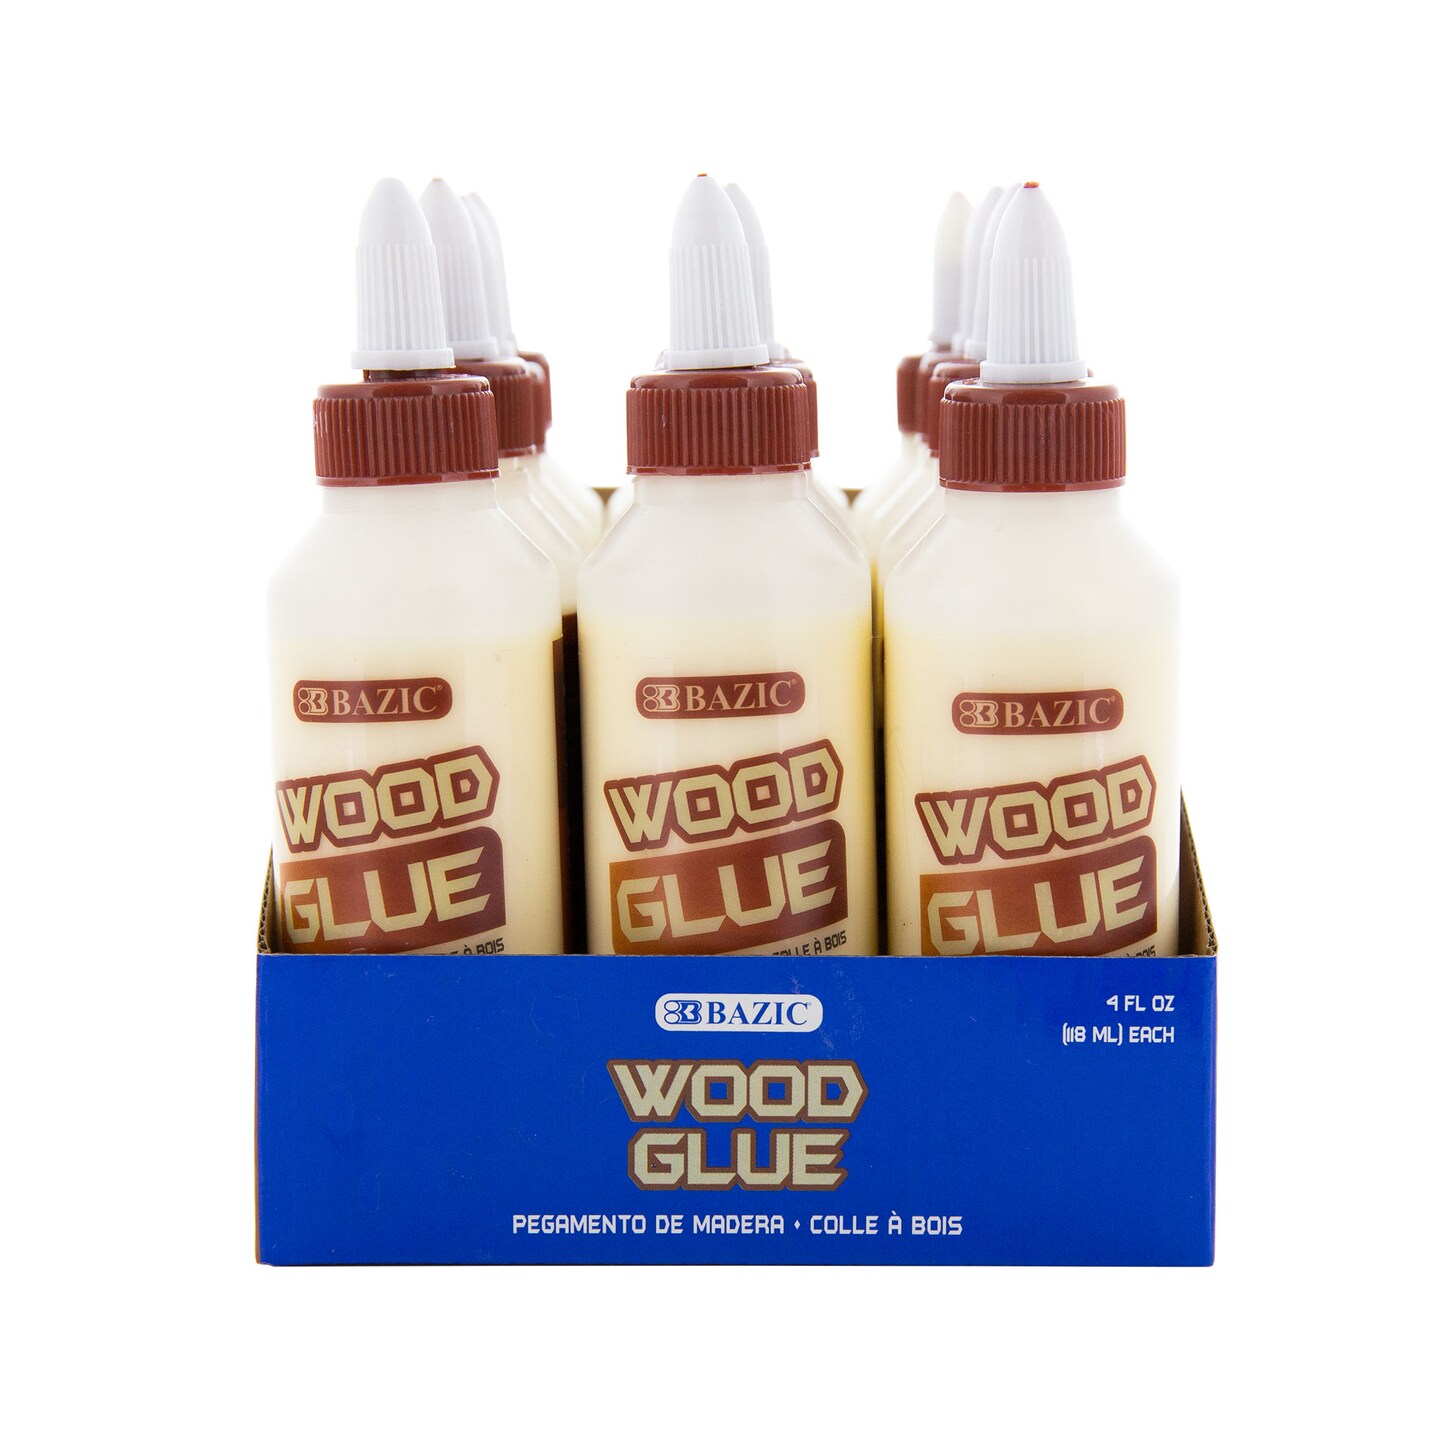 BAZIC Wood Glue 4 FL OZ (118 mL) w/ PDQ Display